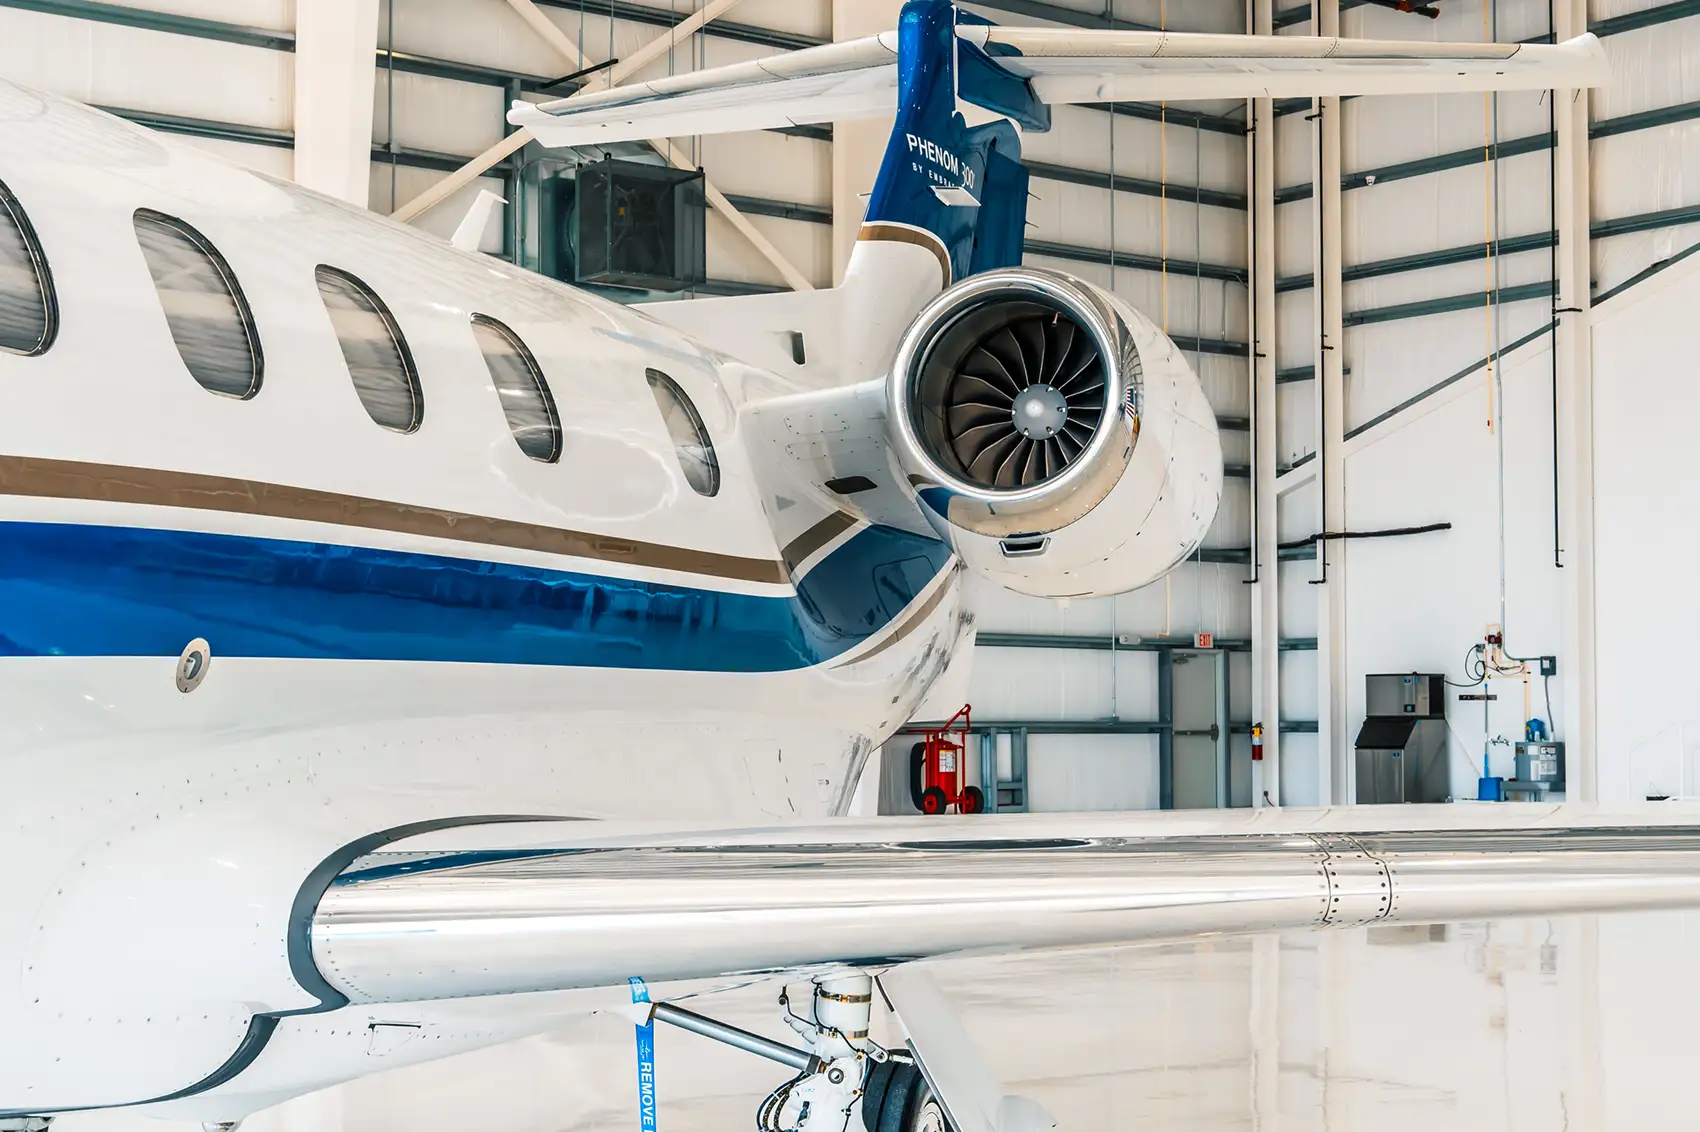 Private jet concierge, jet in hangar